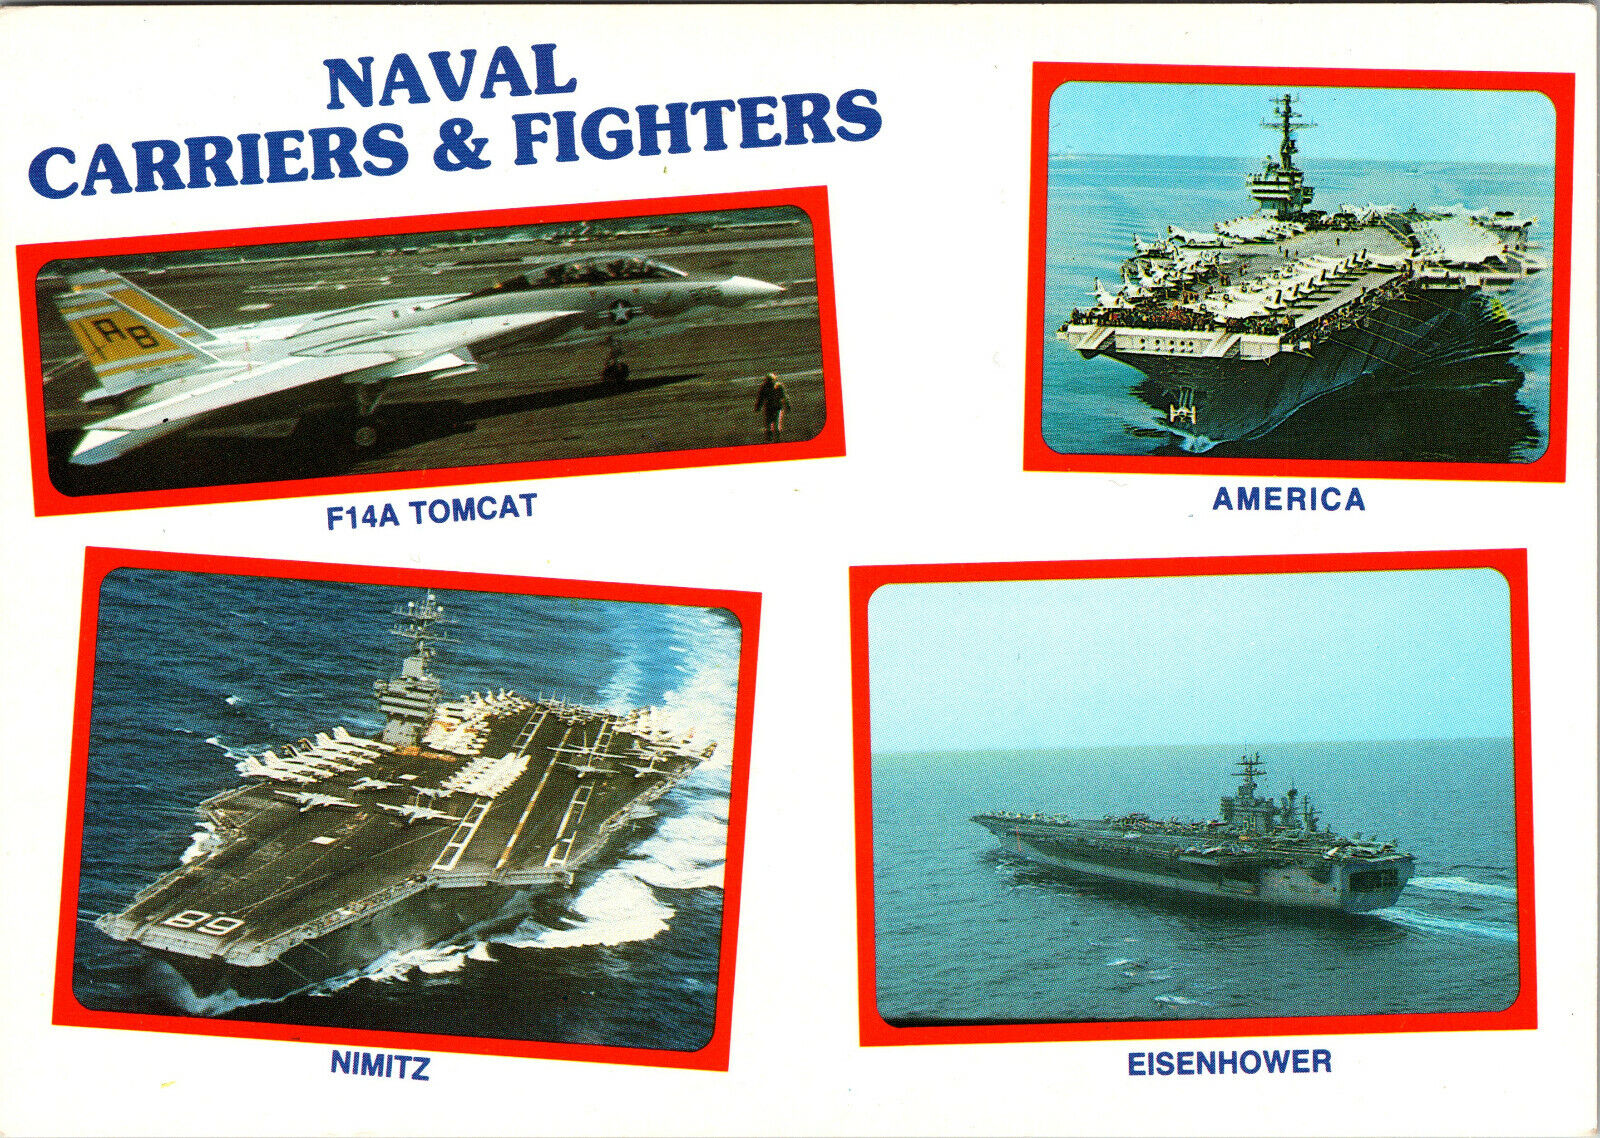 F14a Tomcat Naval Carriers & Fighters Postcard America Nimitz Eisenhower Planes